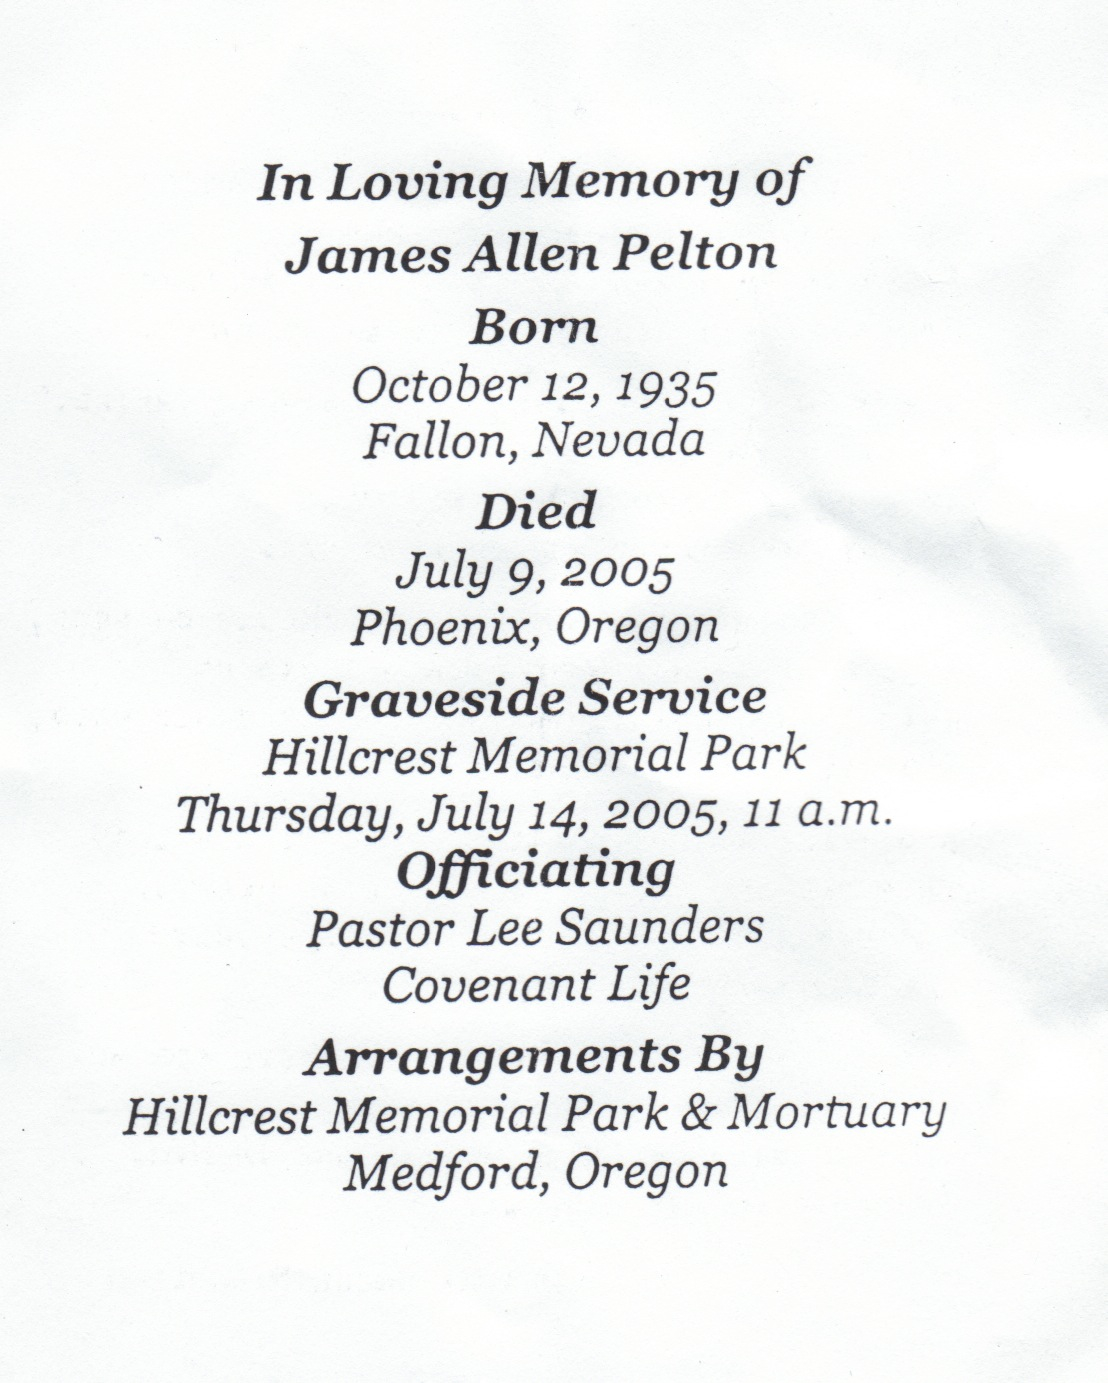 Jim Pelton's Memorial folder